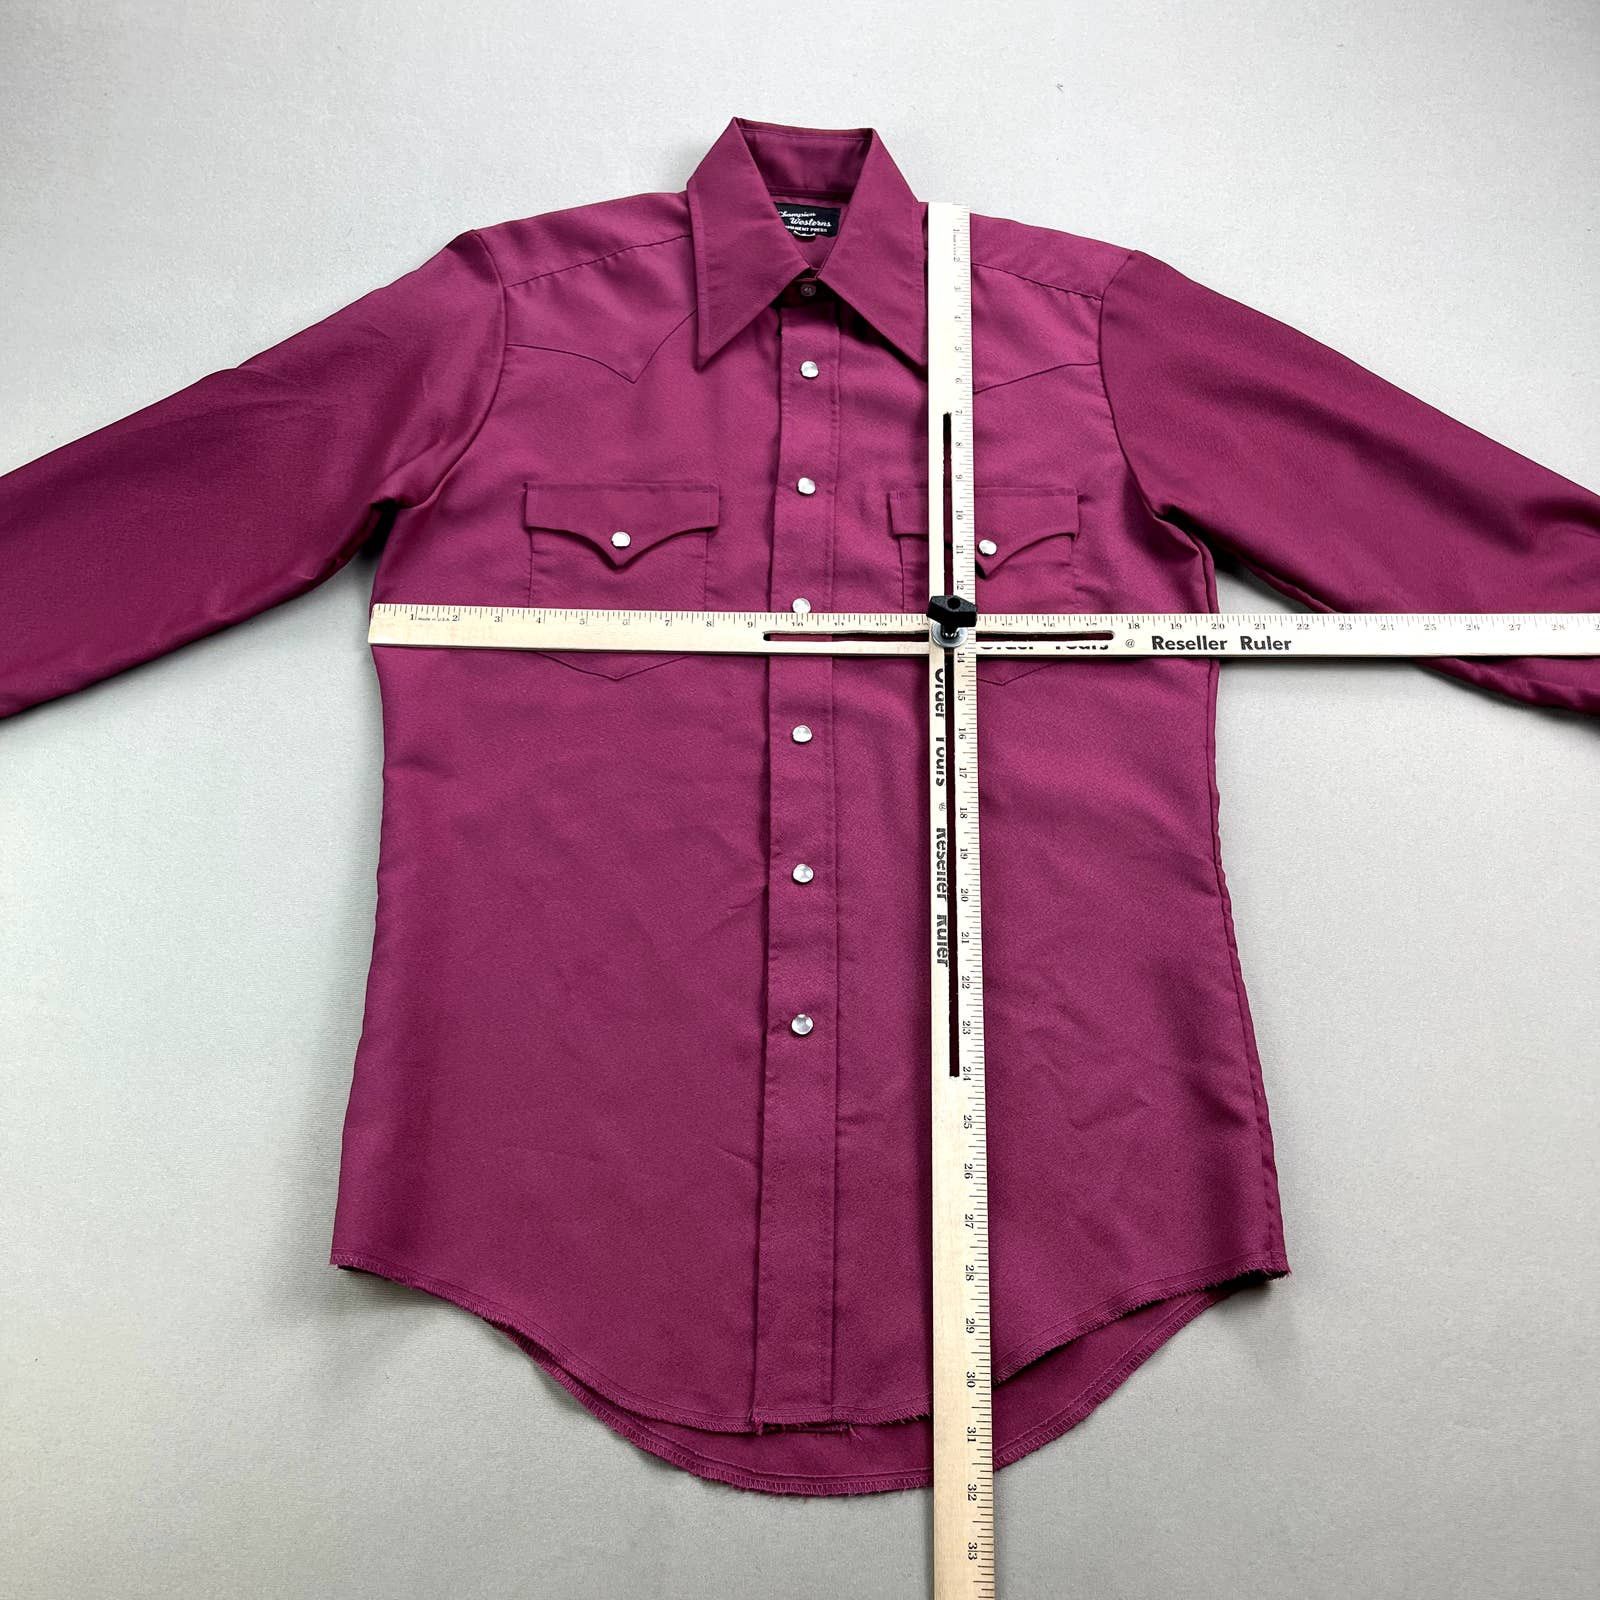 Vintage Vintage Champion Westerns Shirt Medium 15-33 Pink Pearl Snap Size US M / EU 48-50 / 2 - 6 Thumbnail